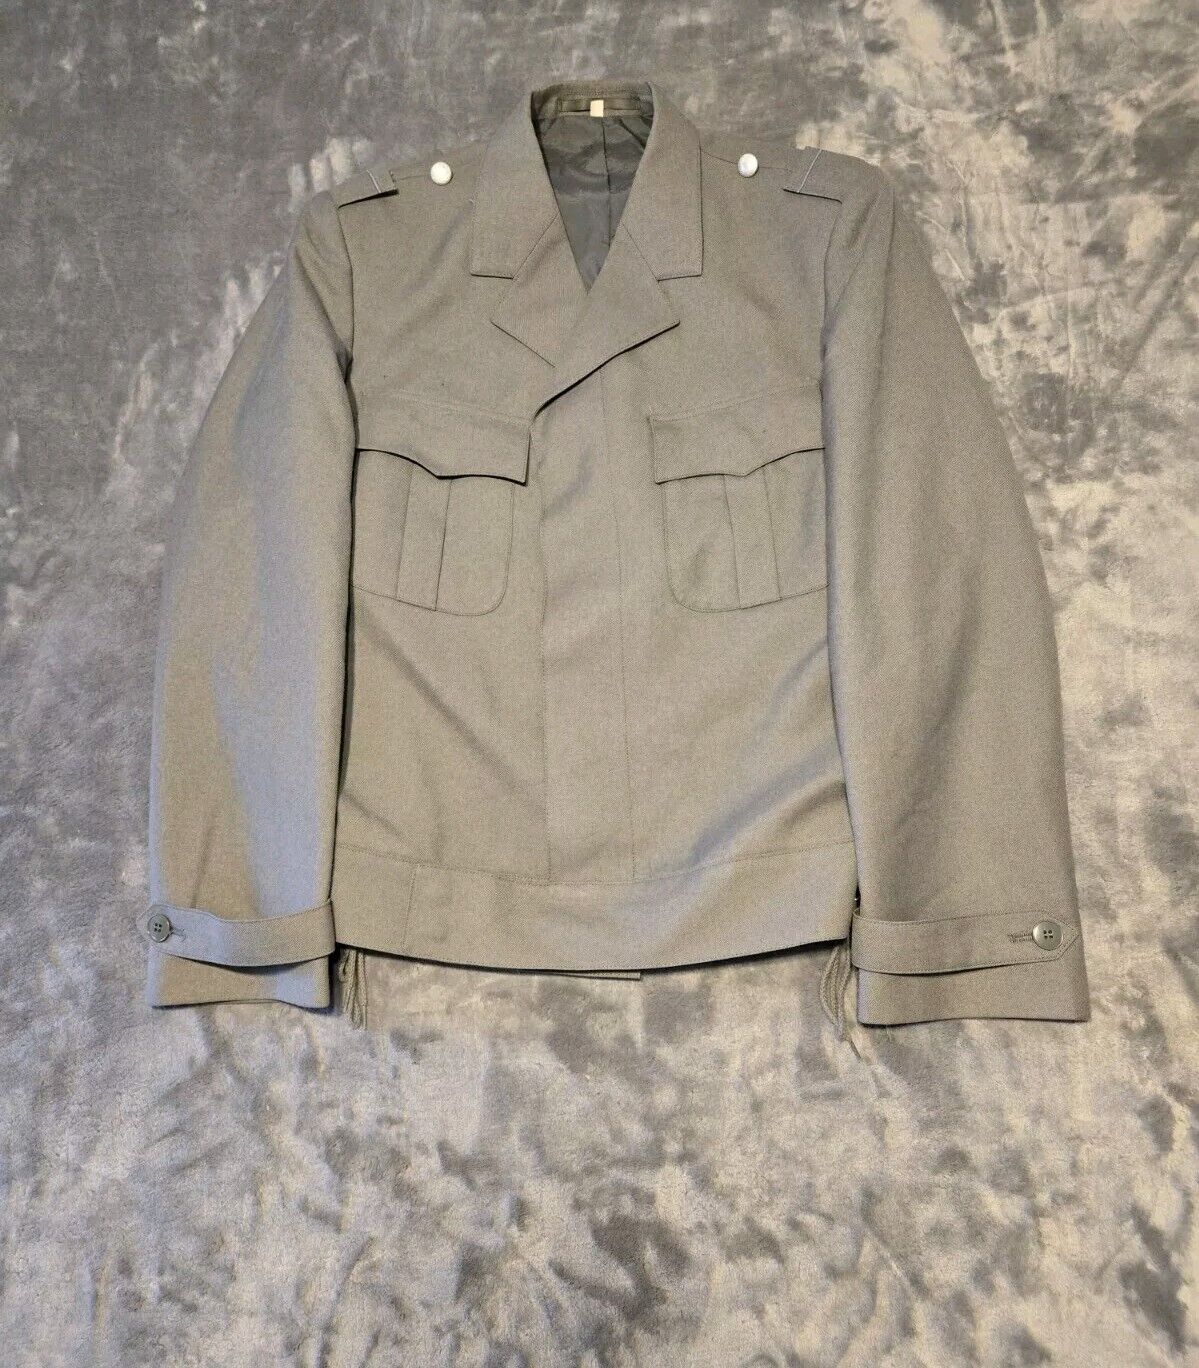 Original 1980 West German Army Uniform Jacket tunic Bundeswehr Military Large